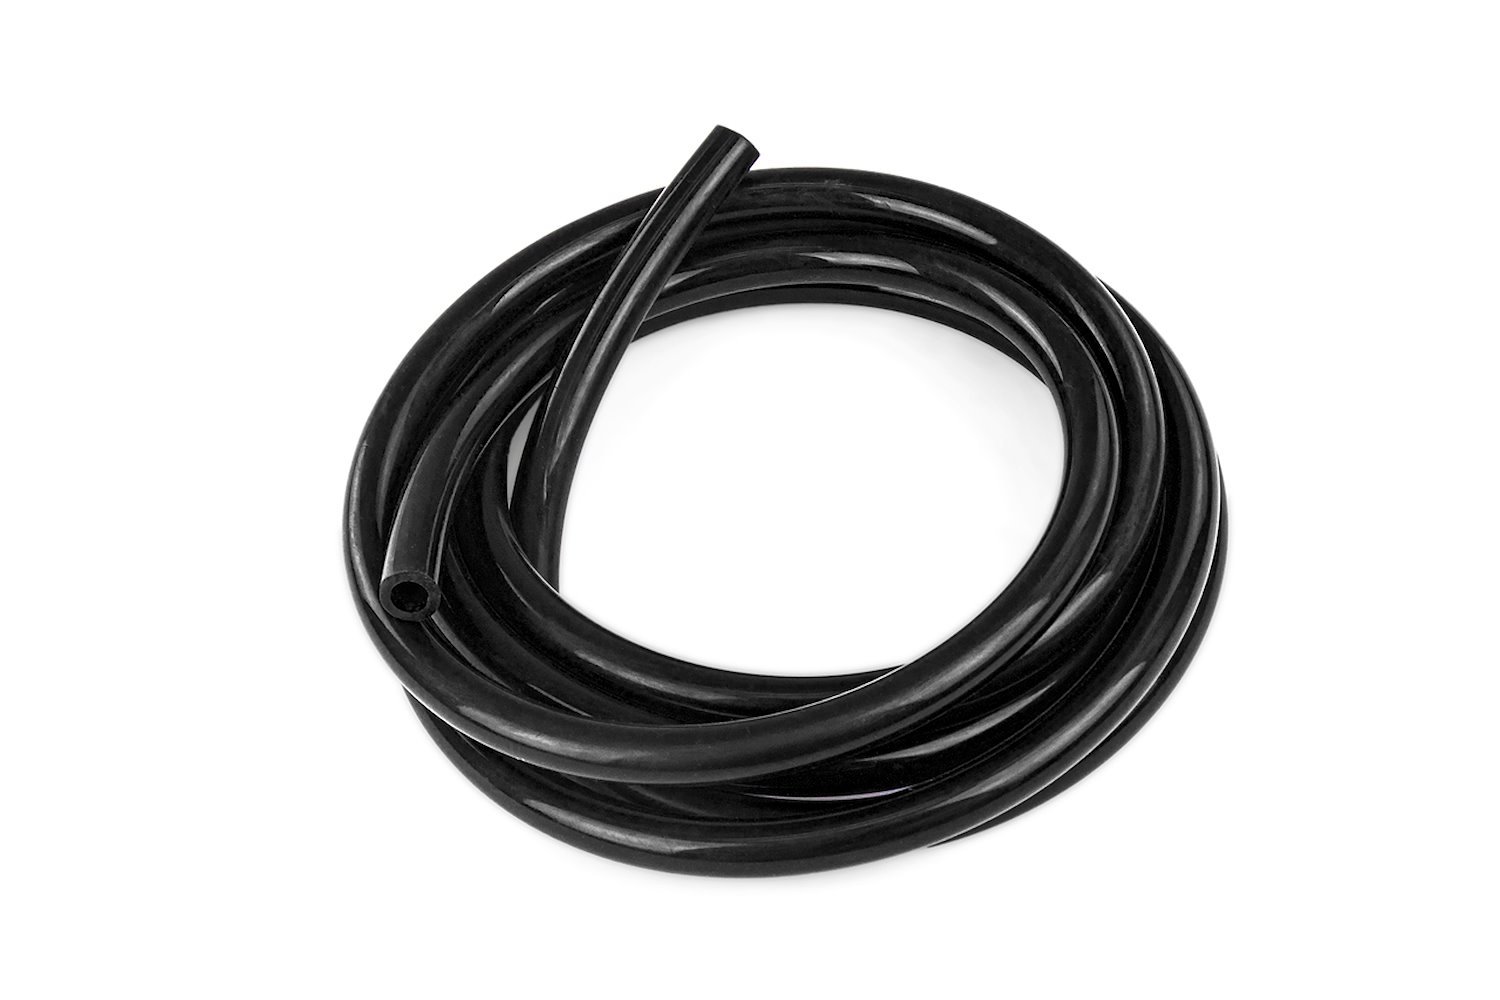 HTSVH8-BLKx25 High-Temperature Silicone Vacuum Hose Tubing, 5/16 in. ID, 25 ft. Roll, Black